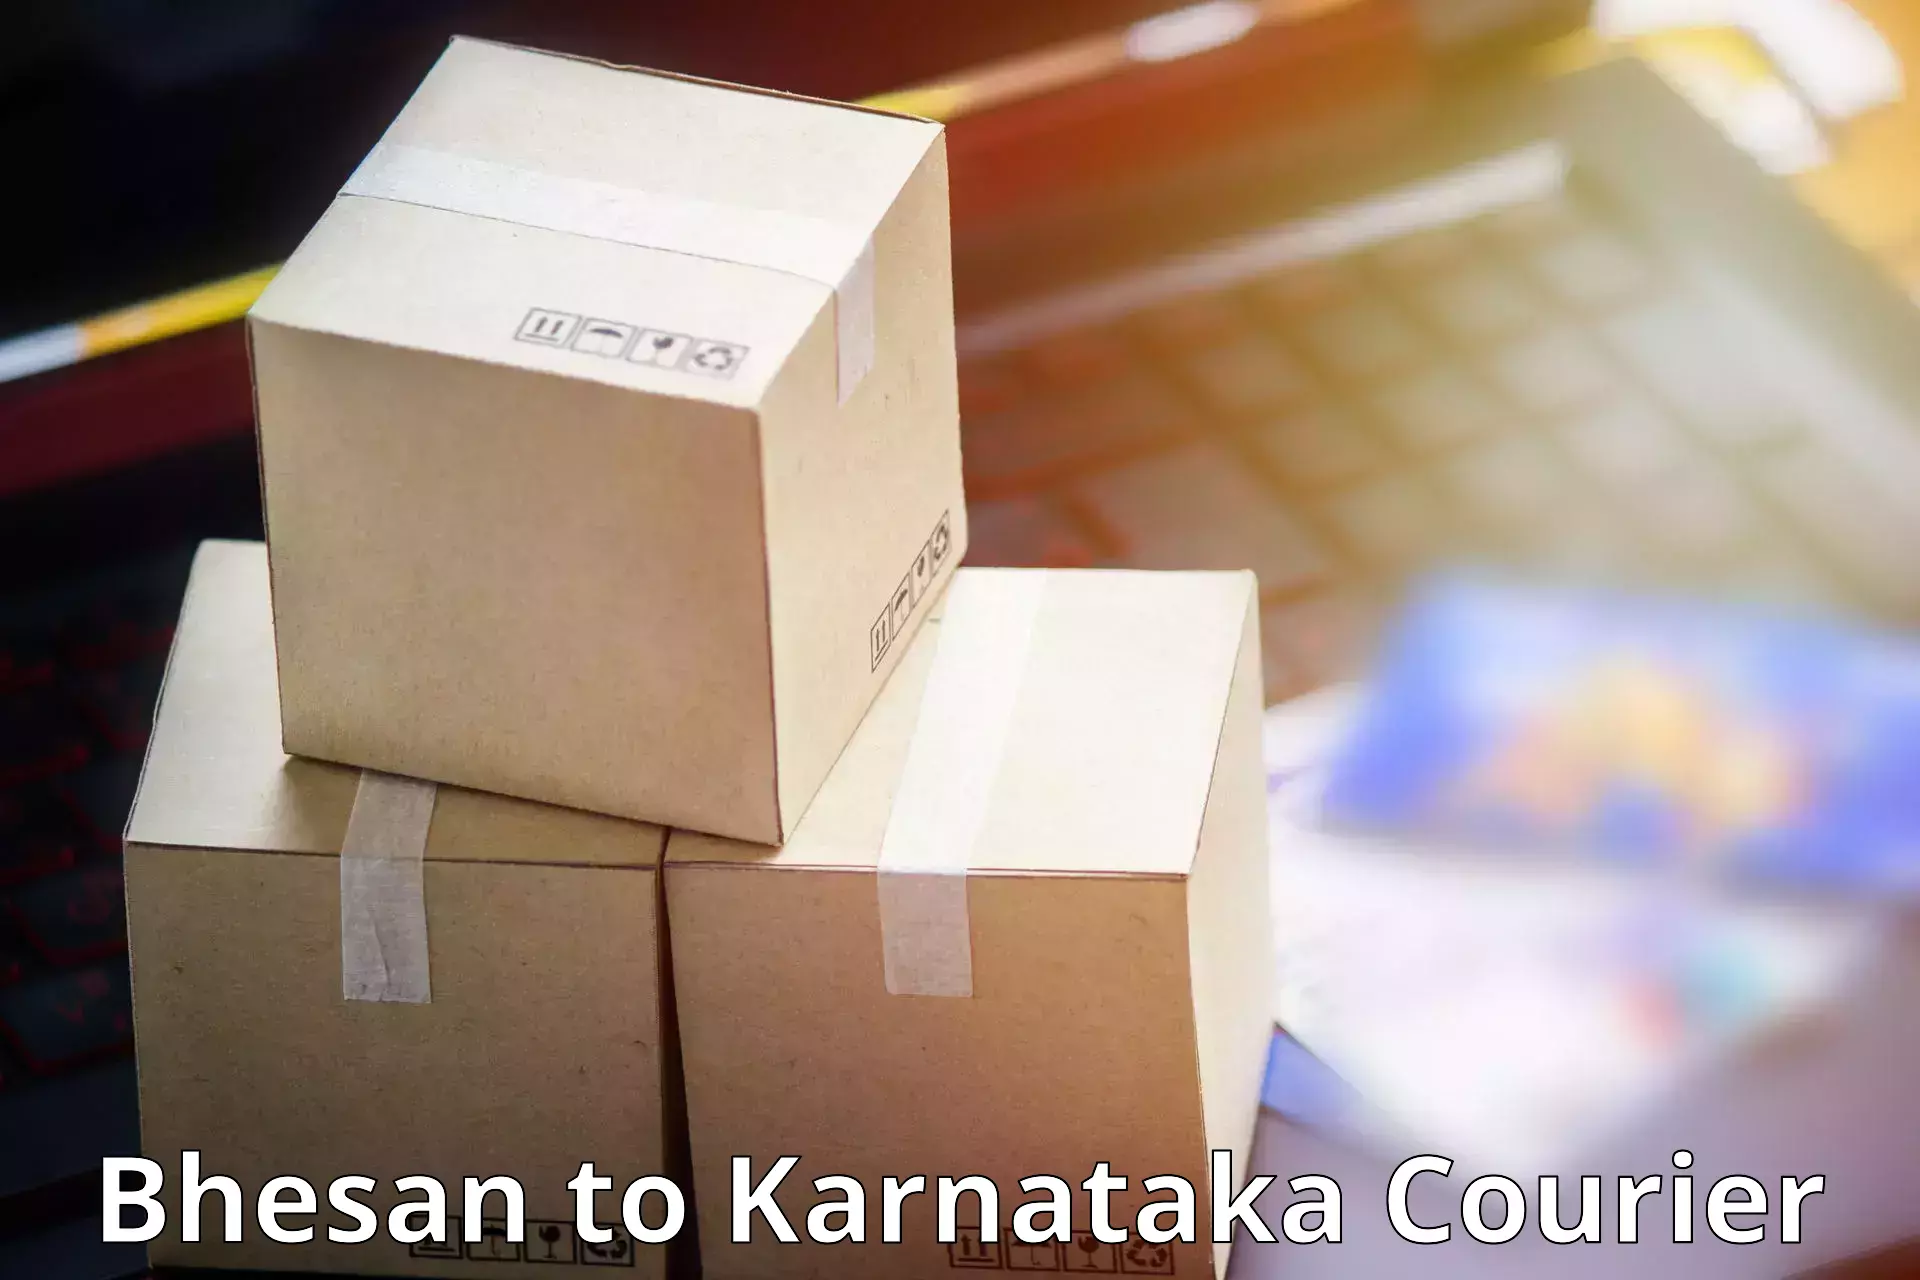 Custom courier packaging Bhesan to Karnataka